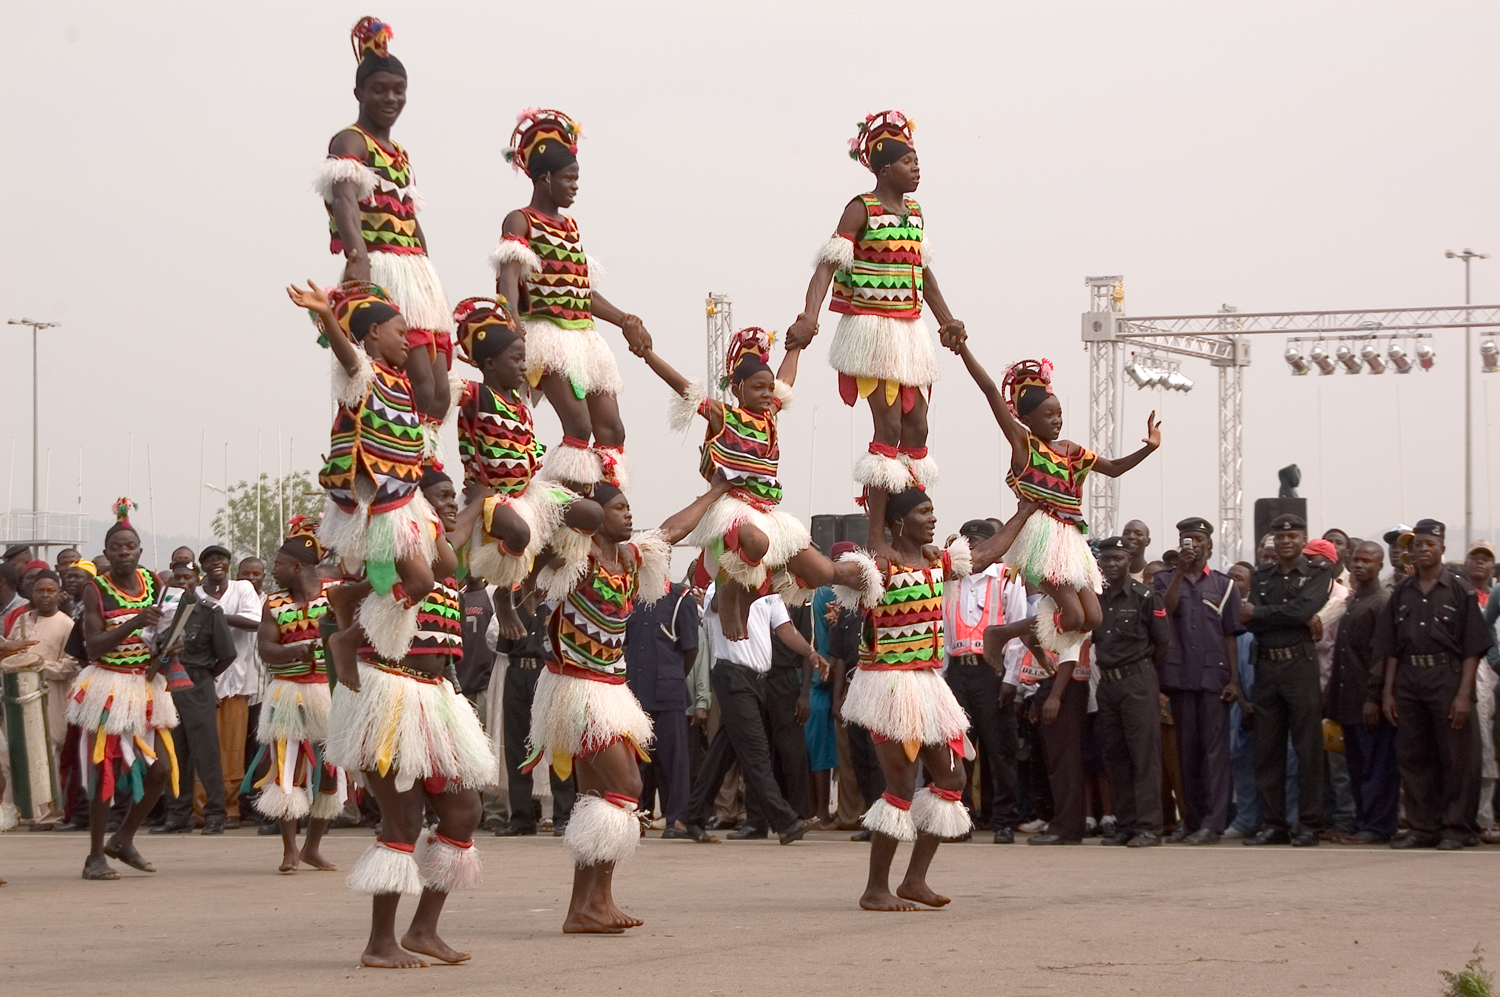 Nkpokiti Dance Group from Anambra state